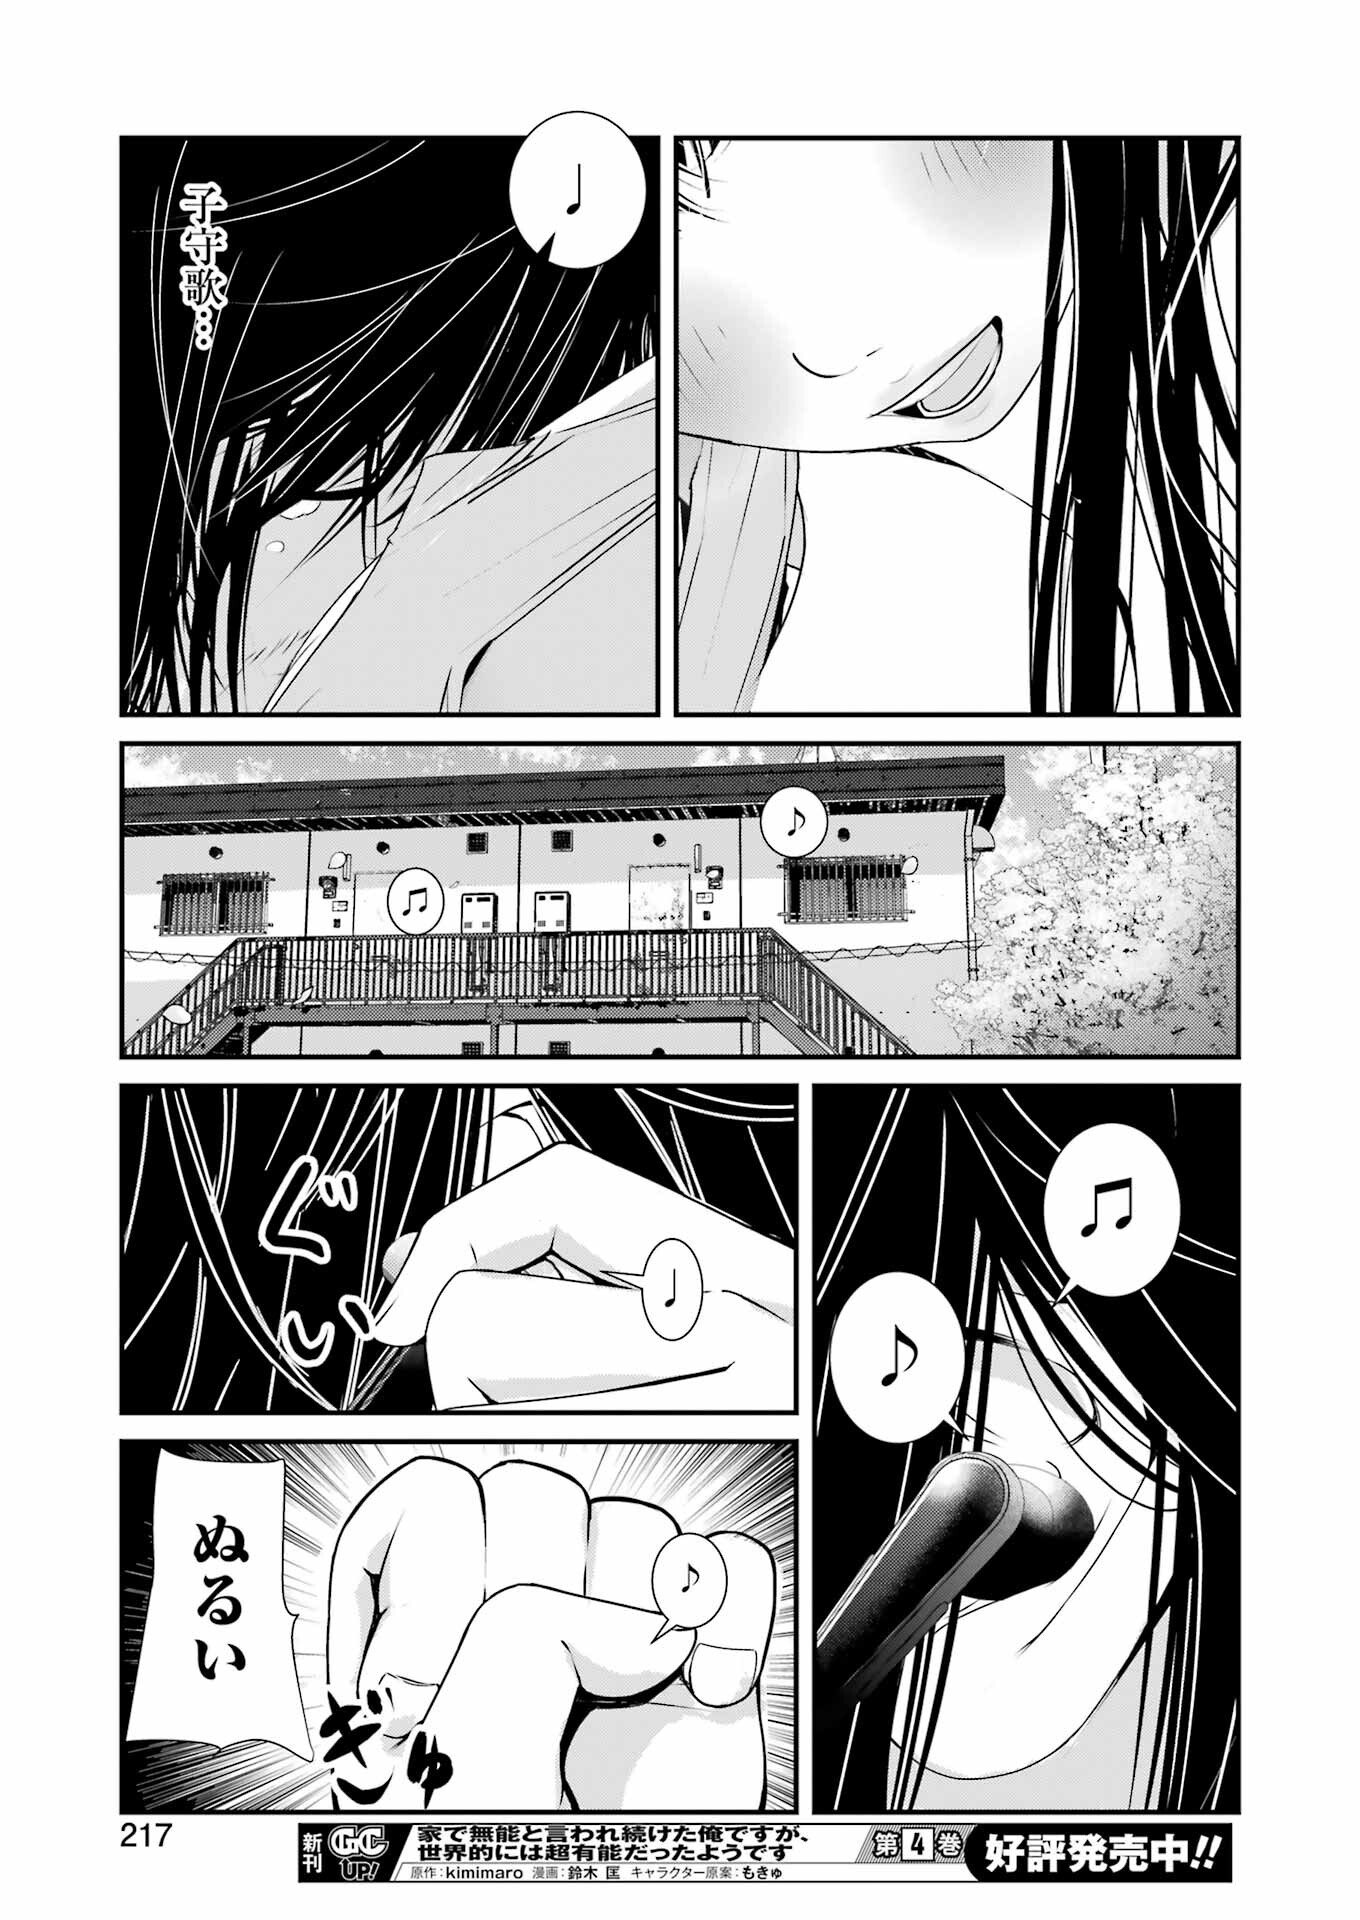 Suika wa Shoushika Tantou - Chapter 7 - Page 23